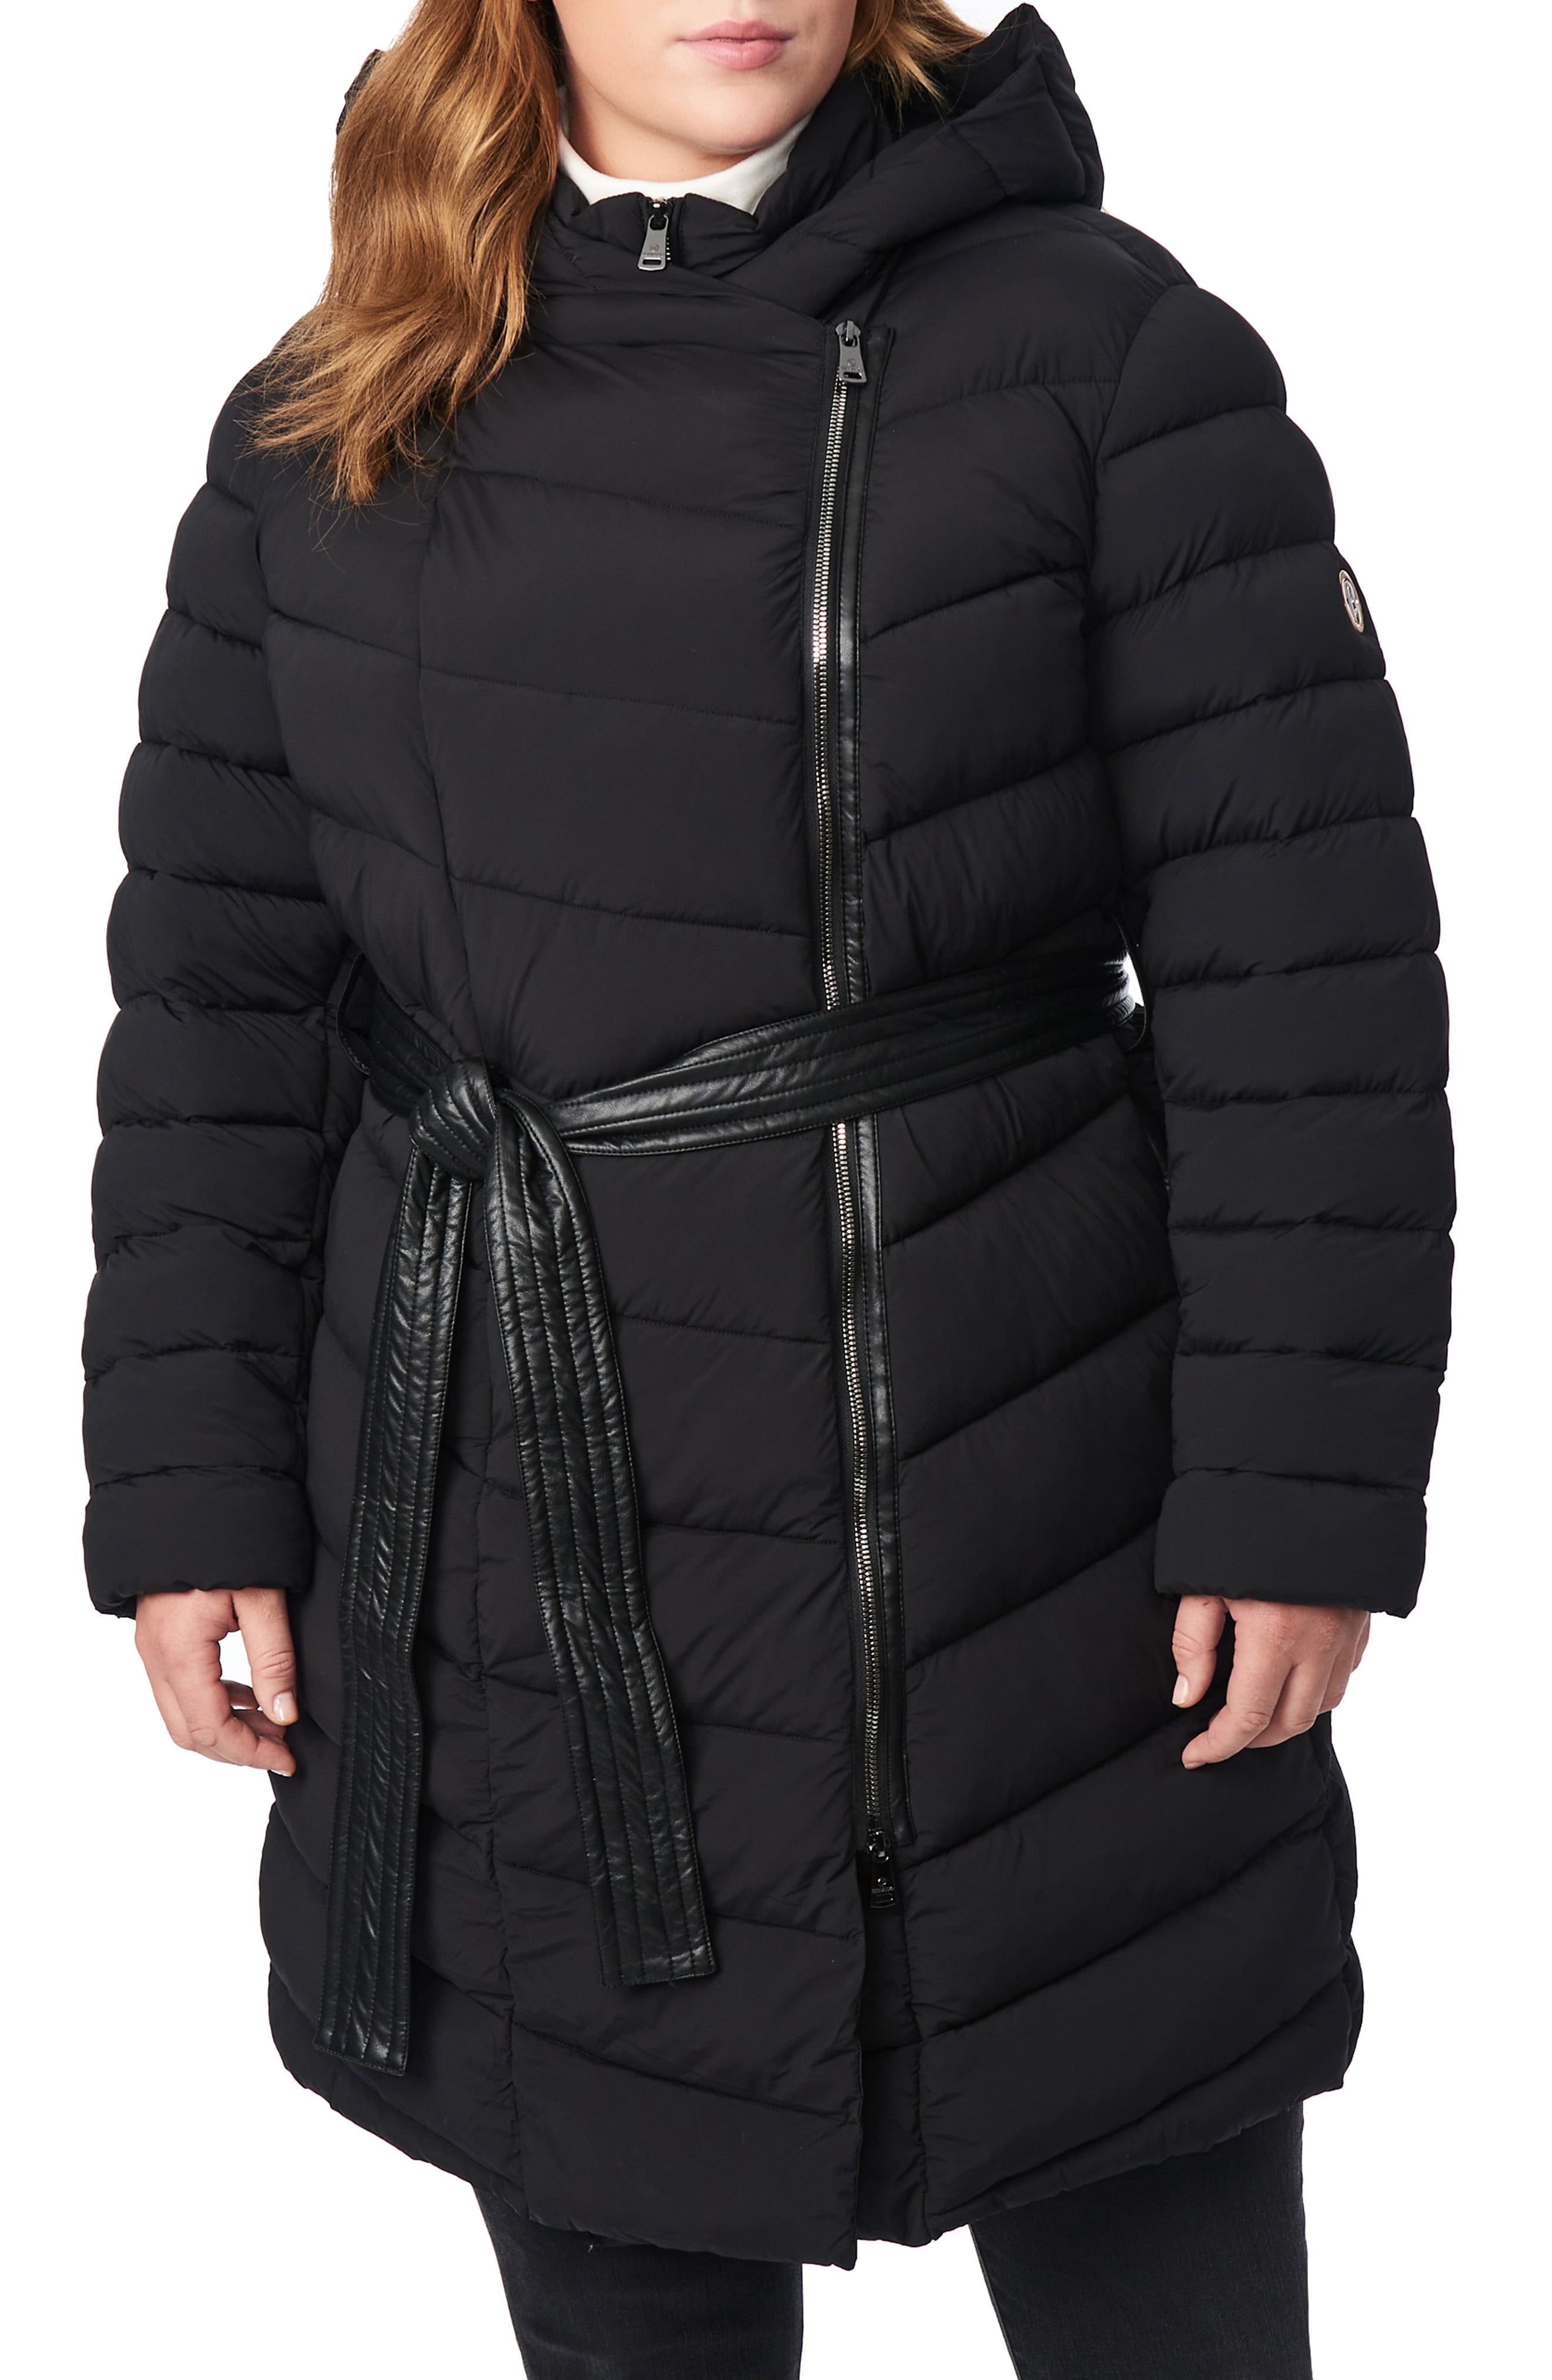 20 Best Plus-Size Coats for Winter 2020 